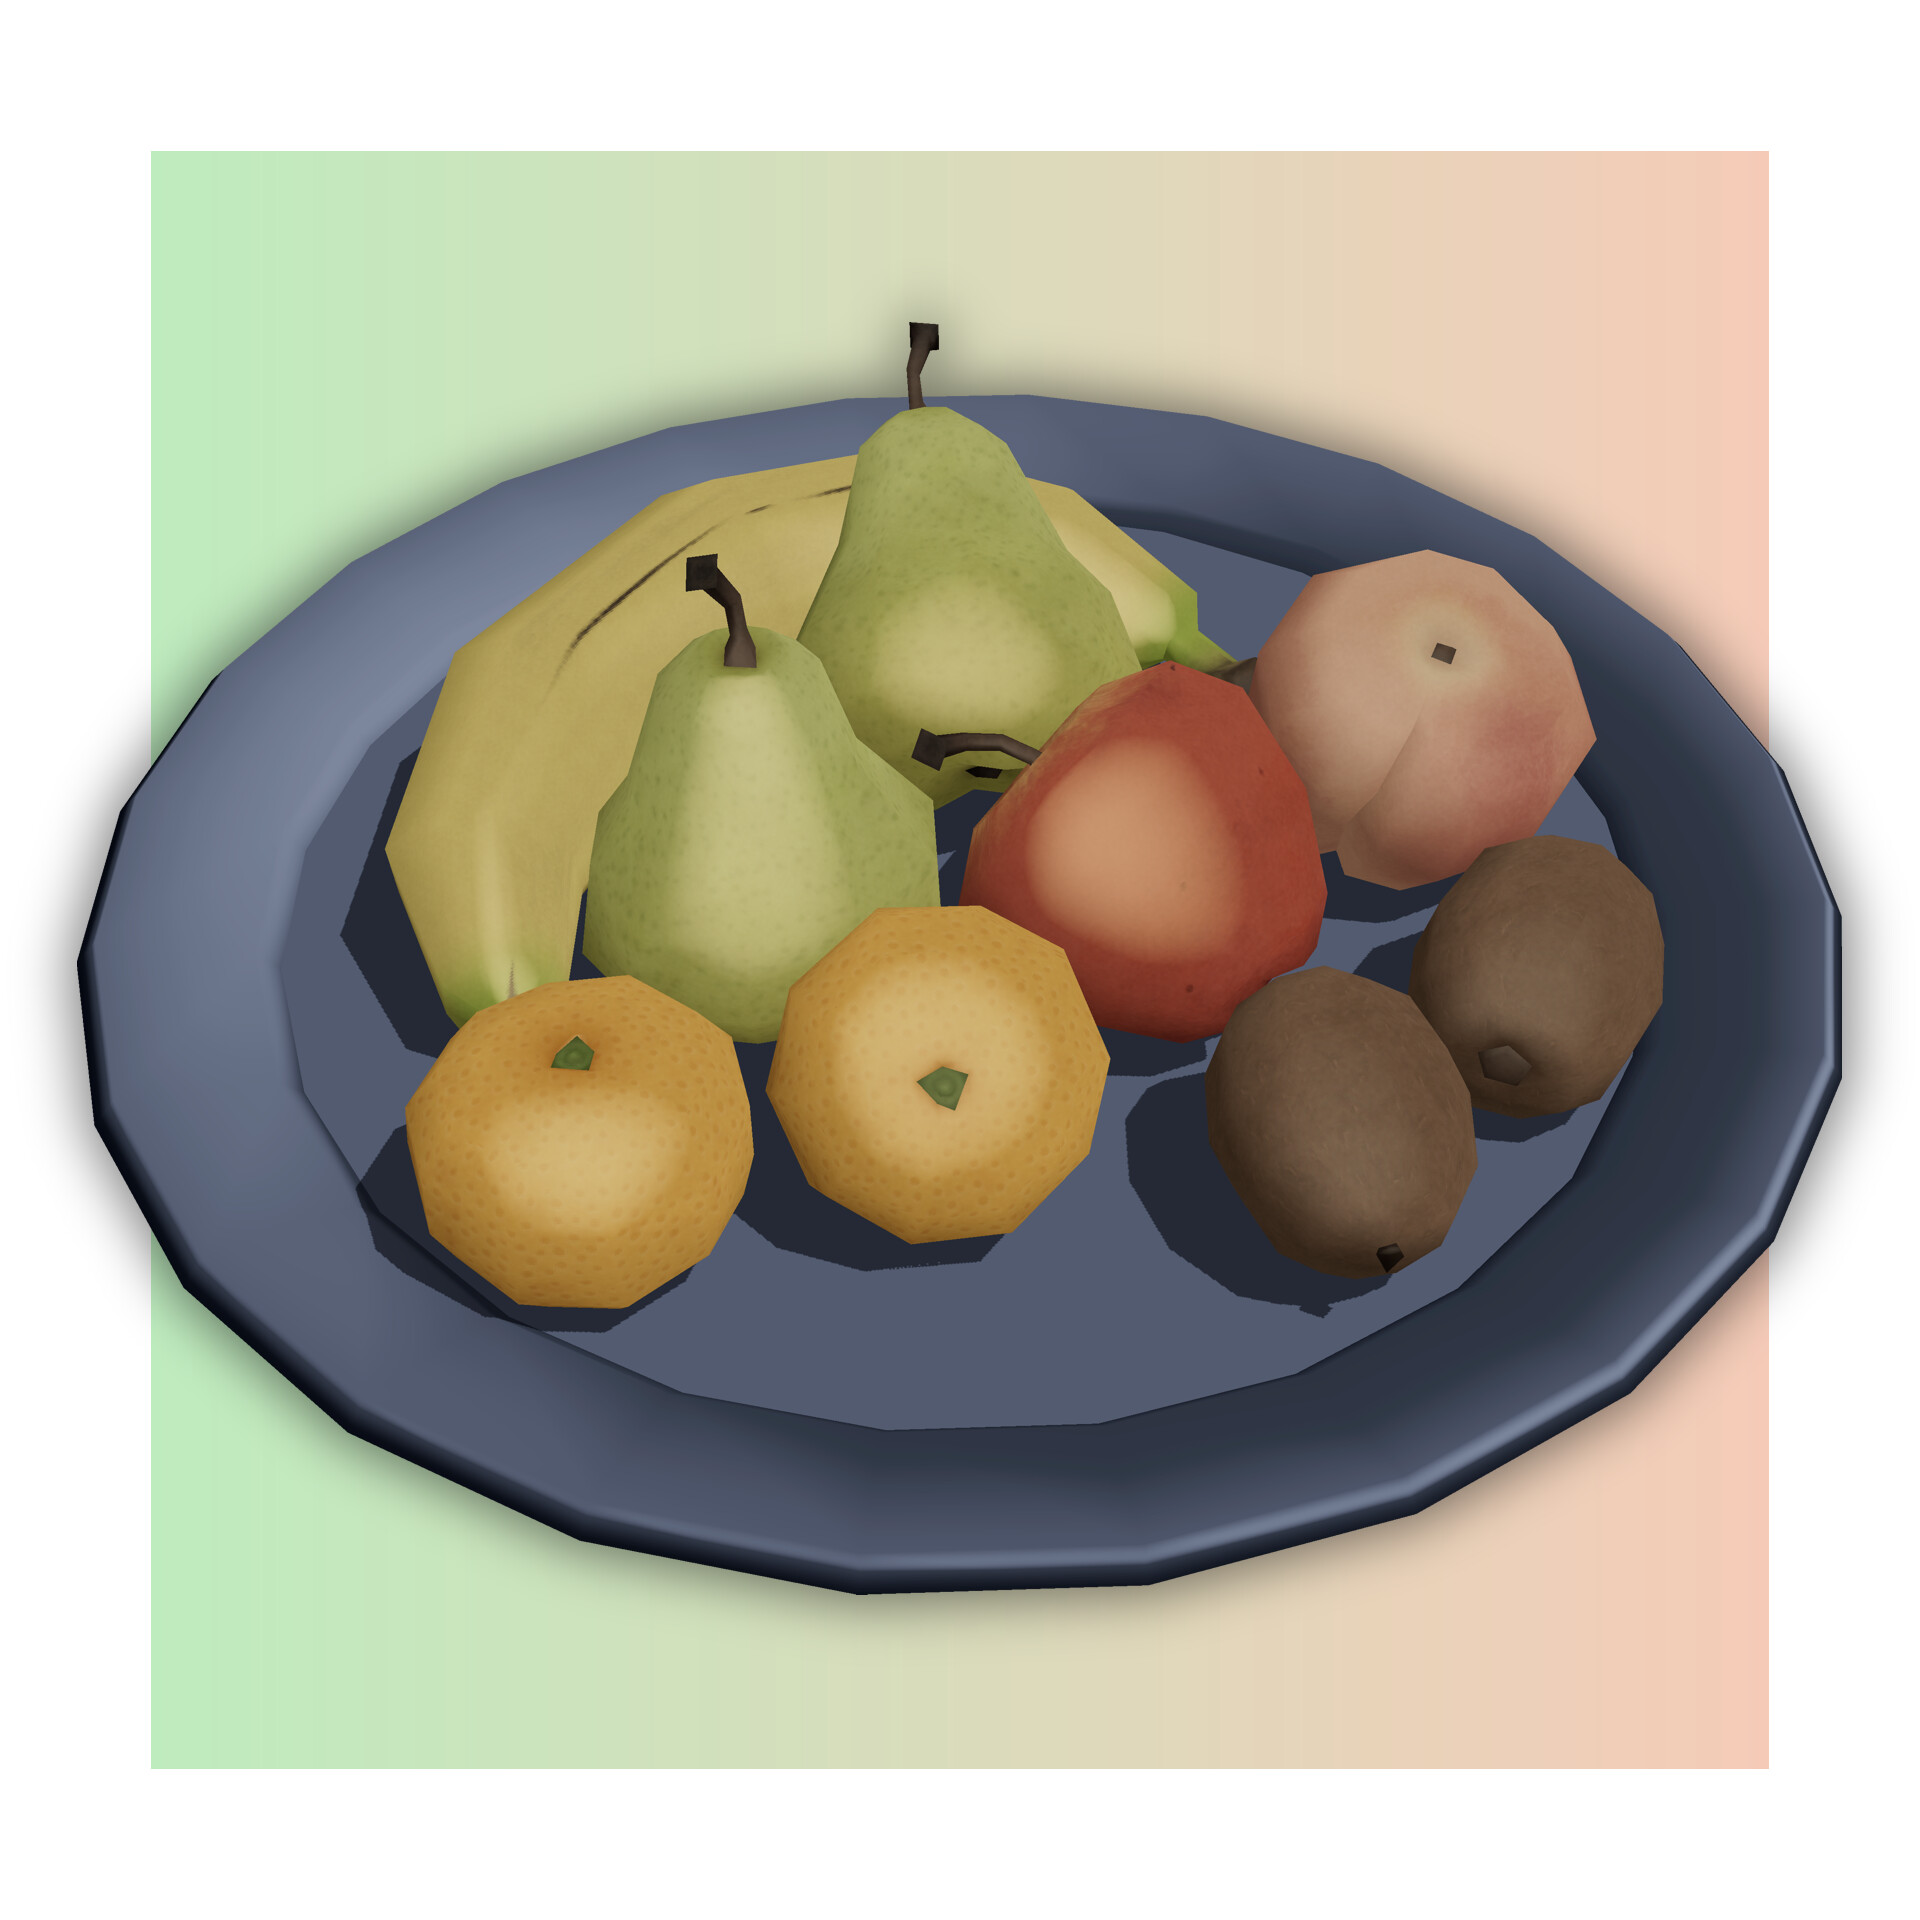 ArtStation - Sliced Fruits Pack